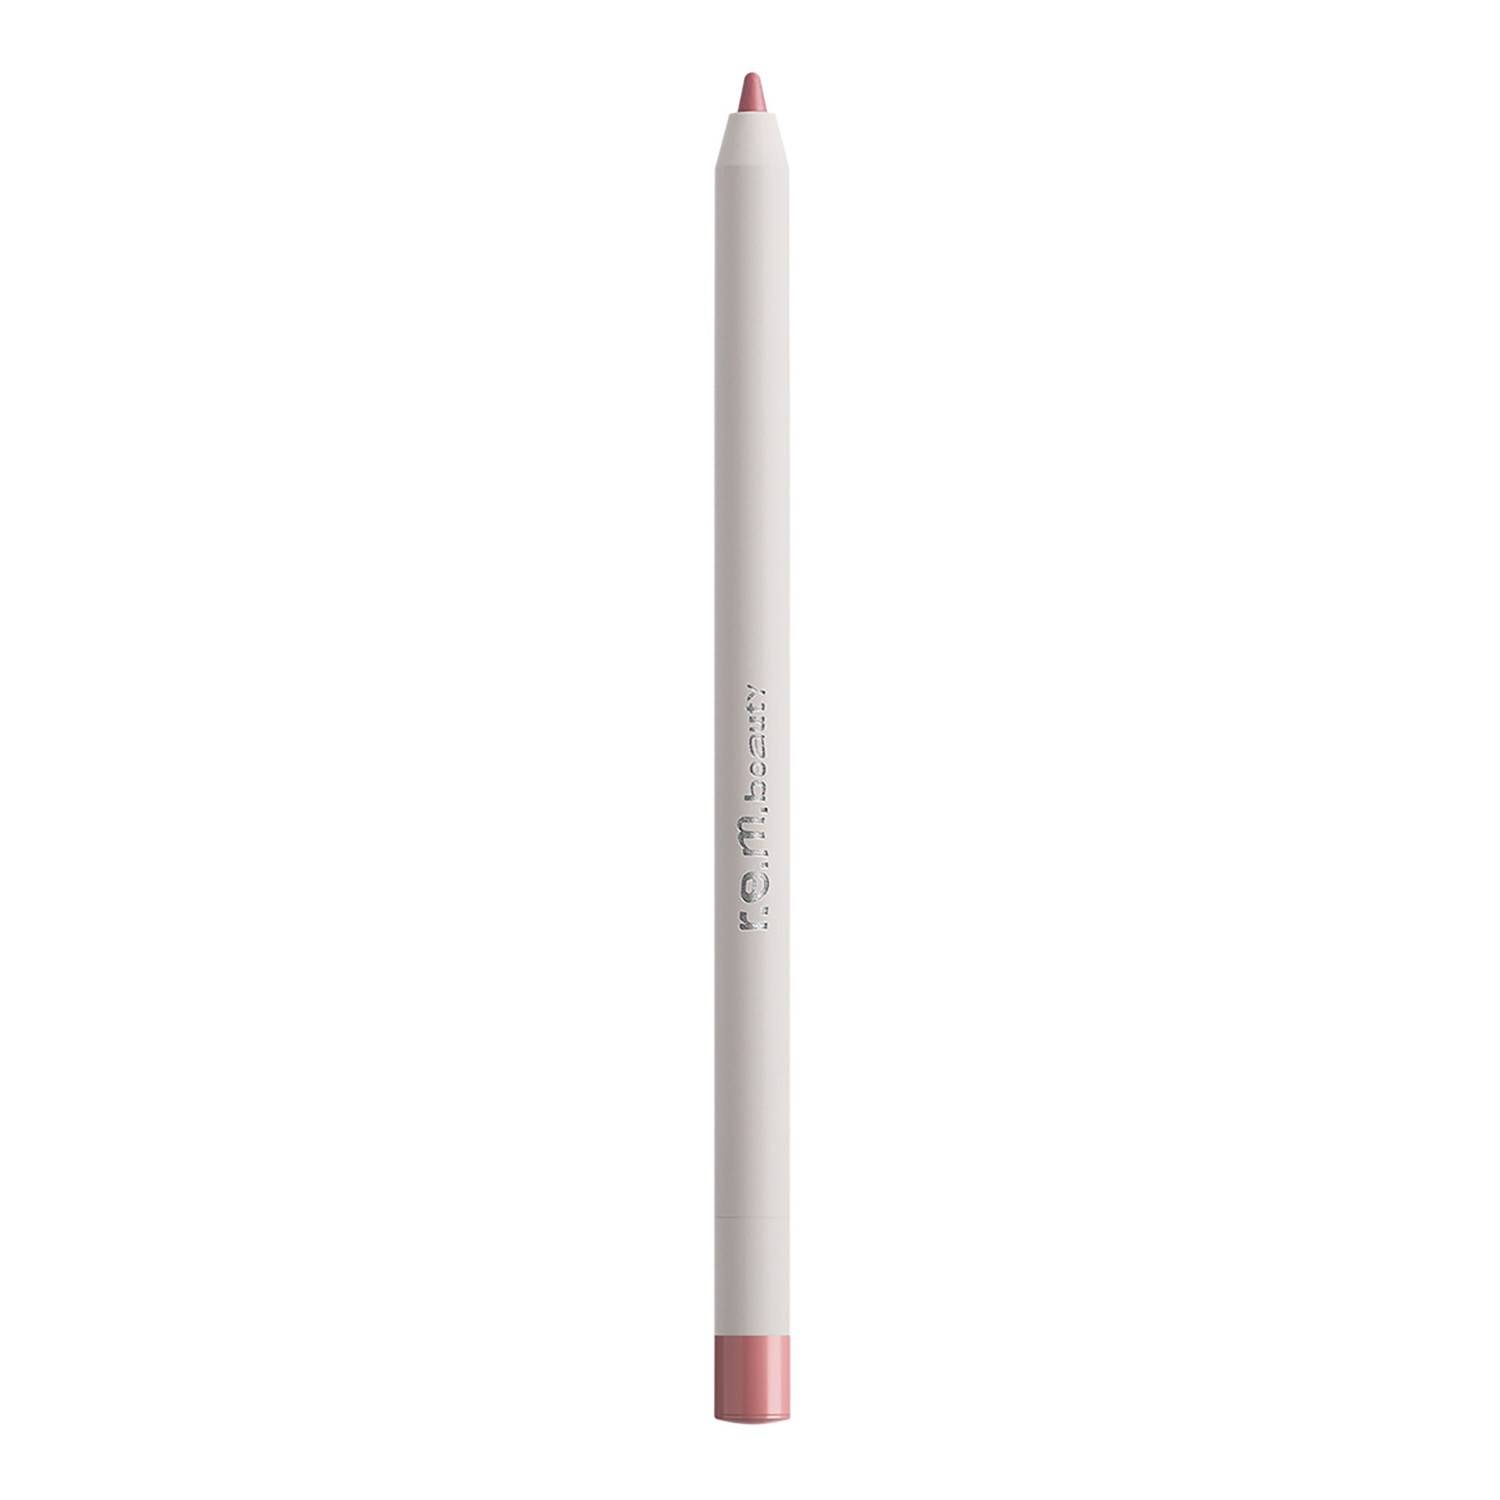 Rem Beauty At The Borderline Lip Liner Pencil 0.5G Top Line Pink Nude